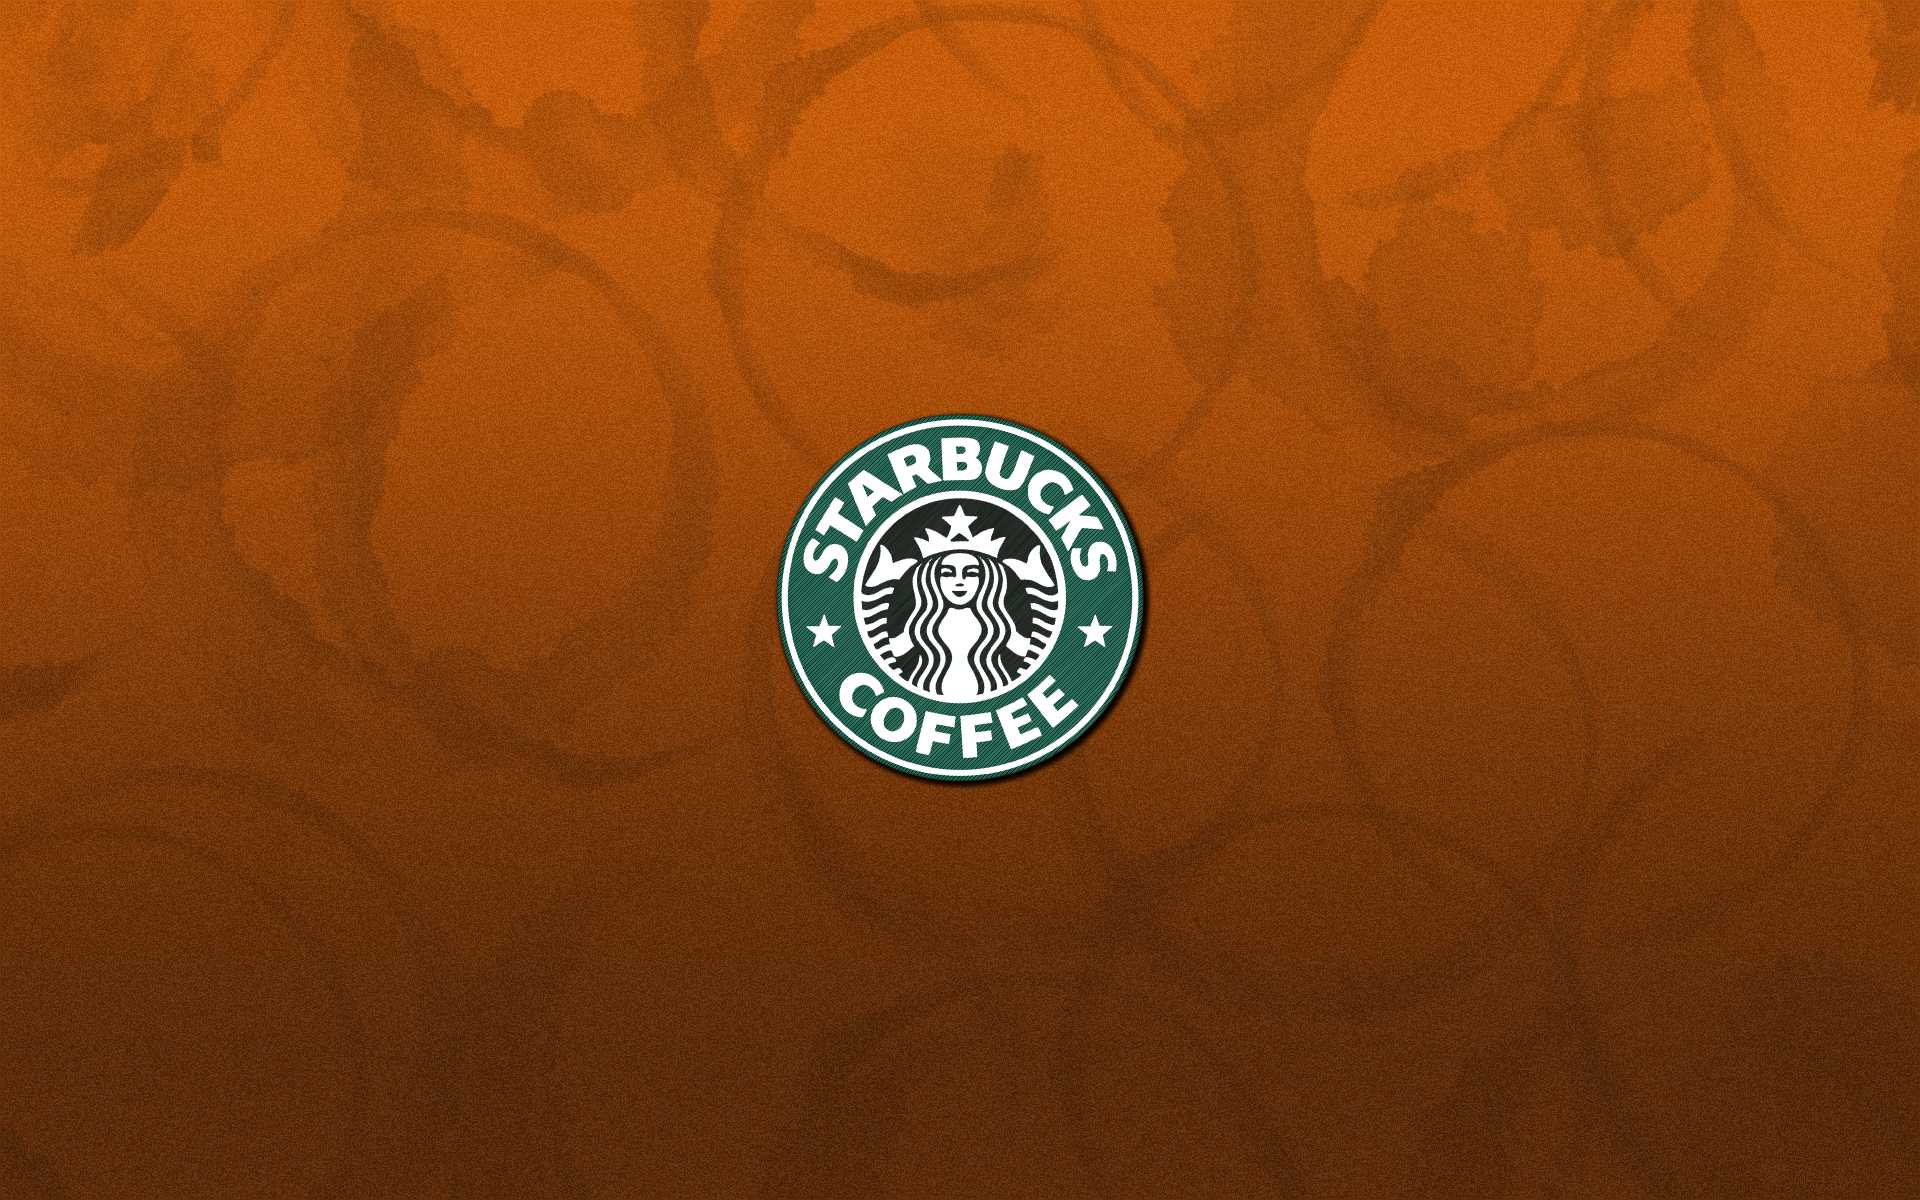 Starbucks Clipart Backgrounds For Powerpoint Templates – Ppt With Starbucks Powerpoint Template